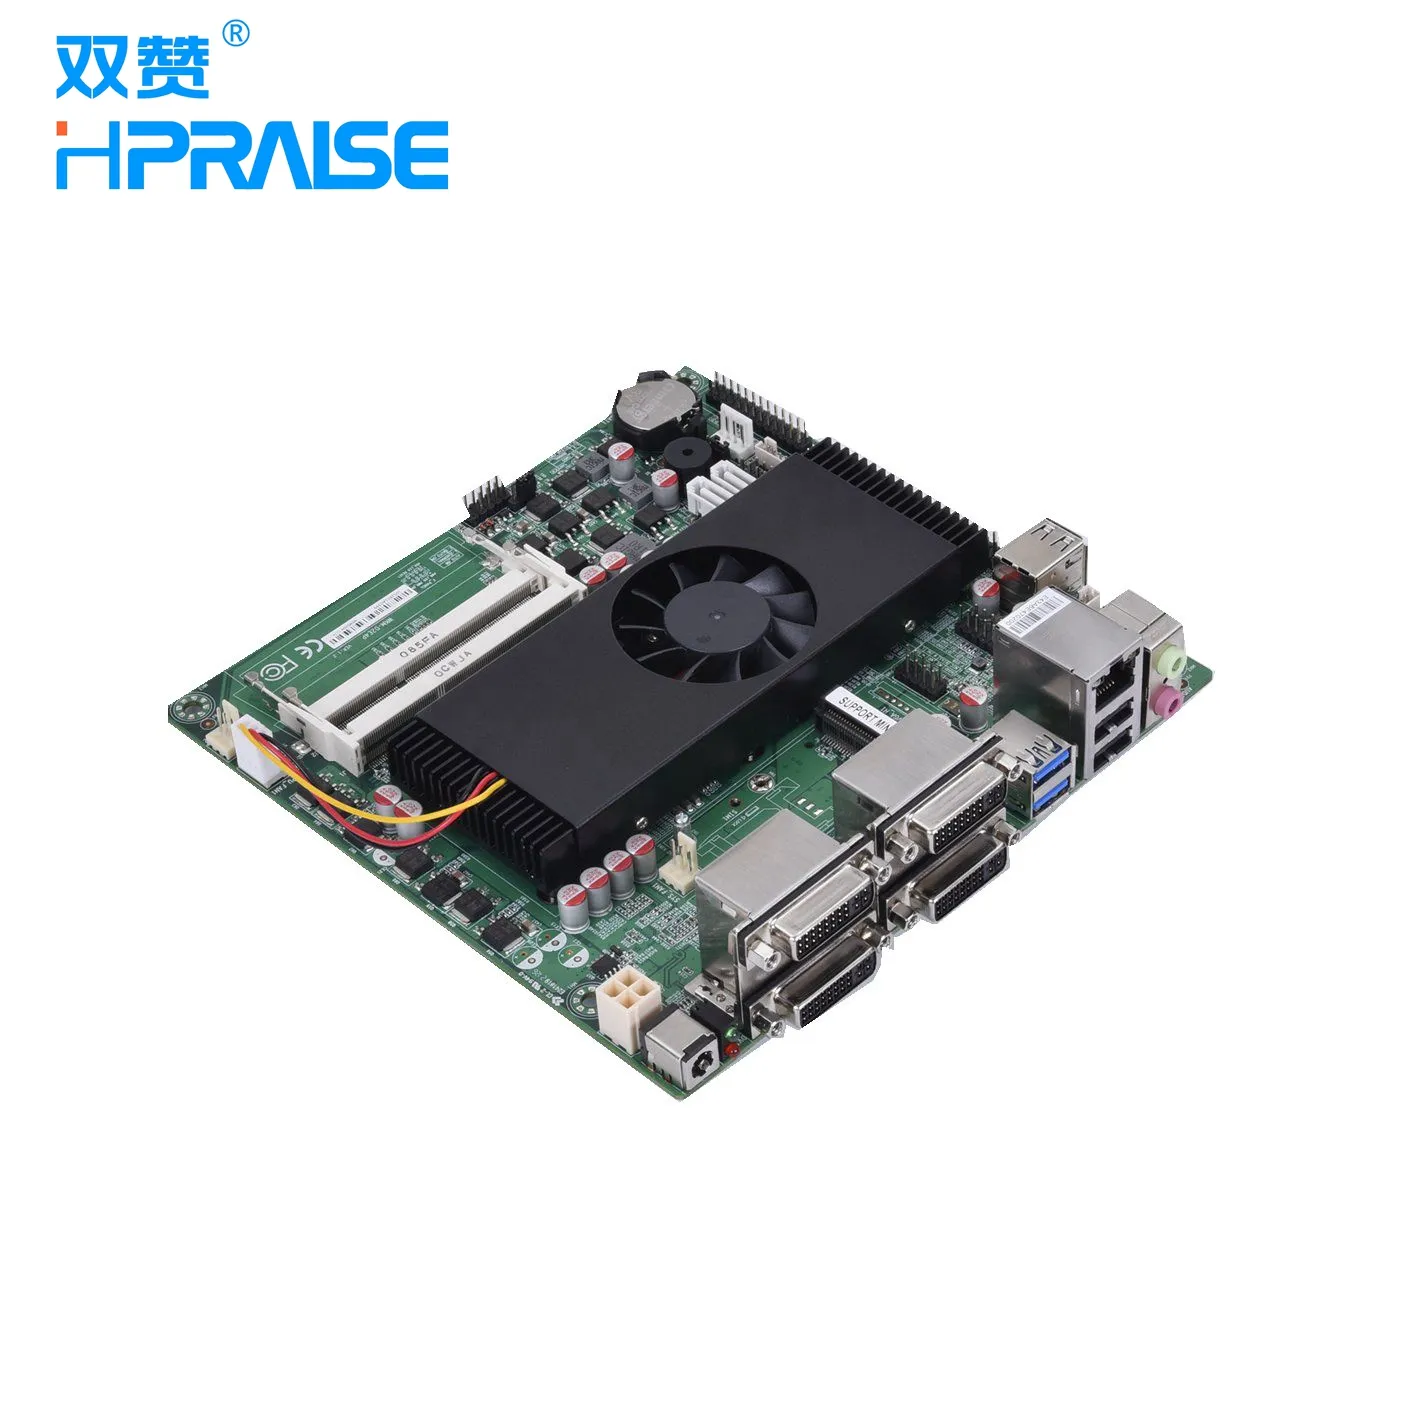 Grosir Industri Mini AMD 4600M Quad Core 2.3GHz Motherboard Gaming Empat Tampilan